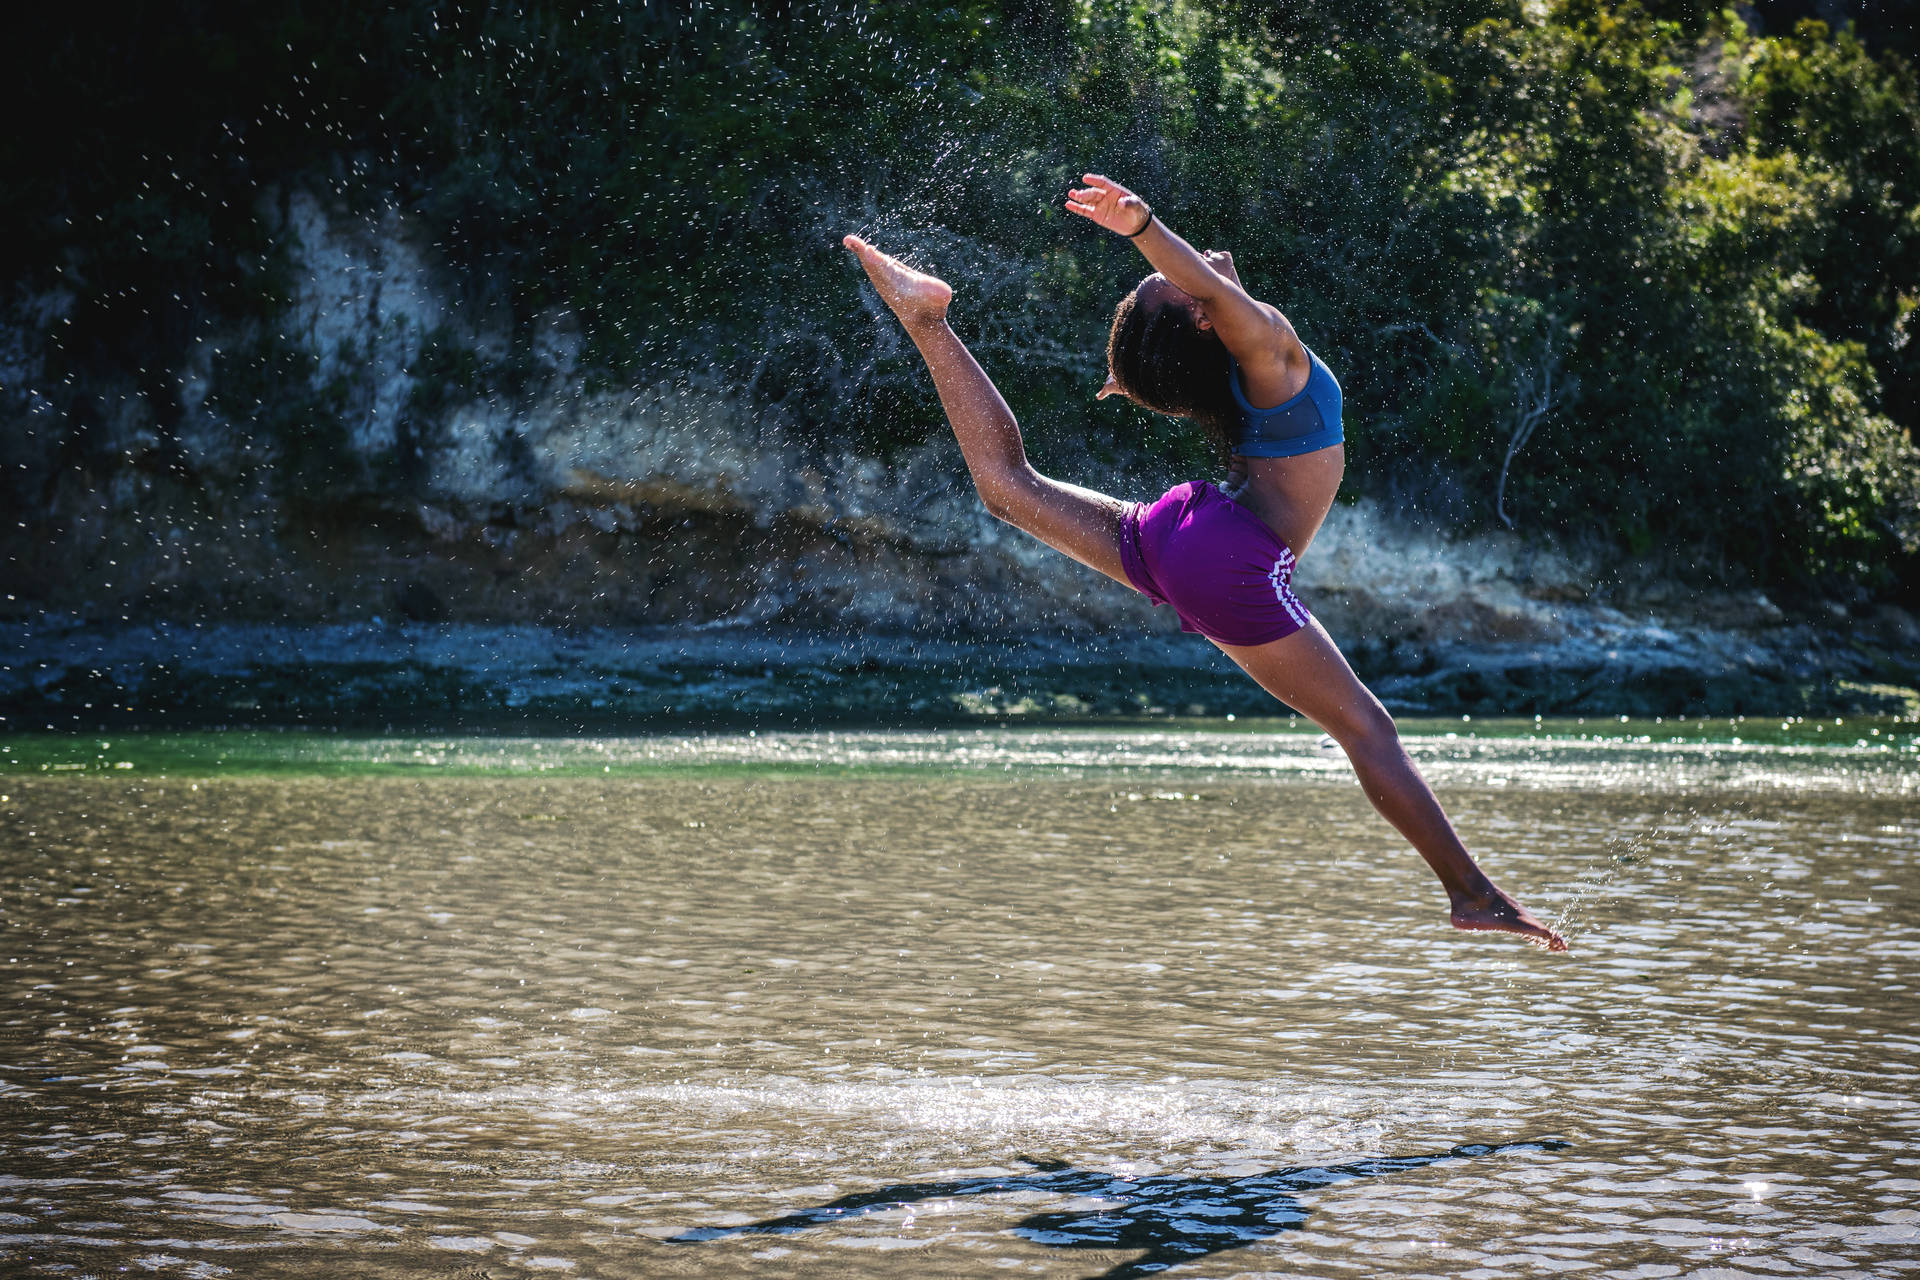 Gymnastics Jump In River Background